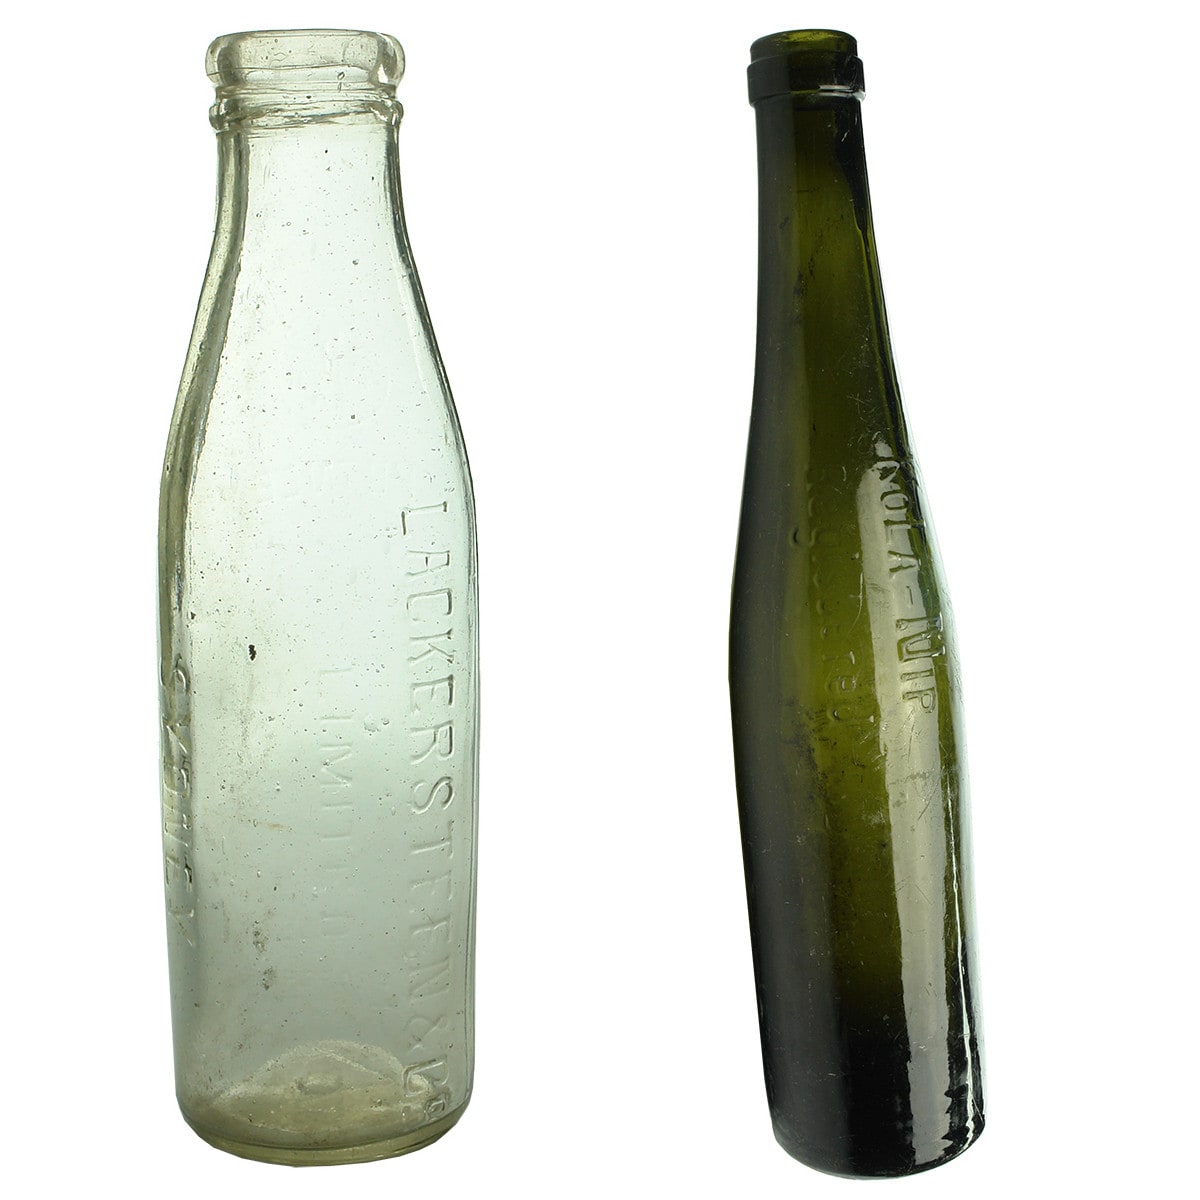 2 Household Bottles: Lackersteen Sydney Chutnee; Kola-Nip.